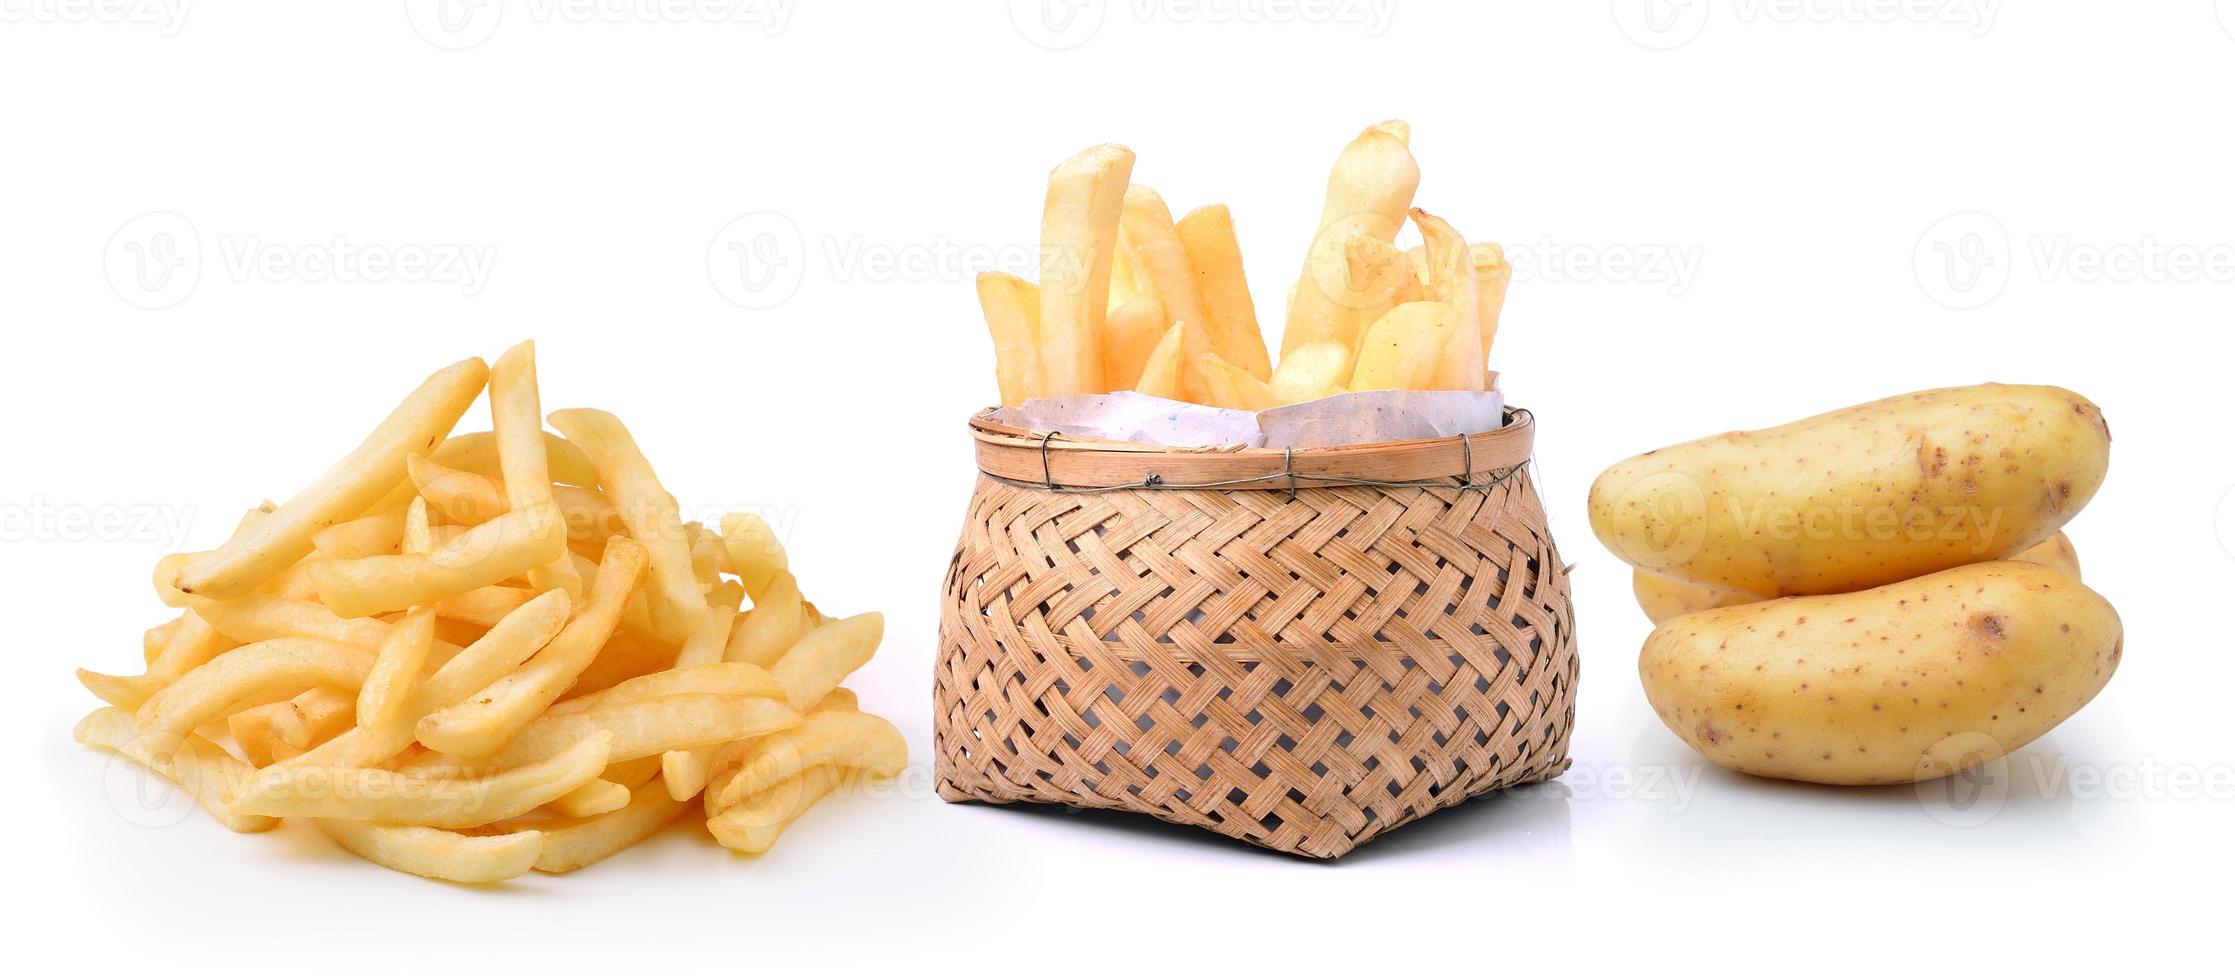 batata e batata frita na cesta isolada no fundo branco foto